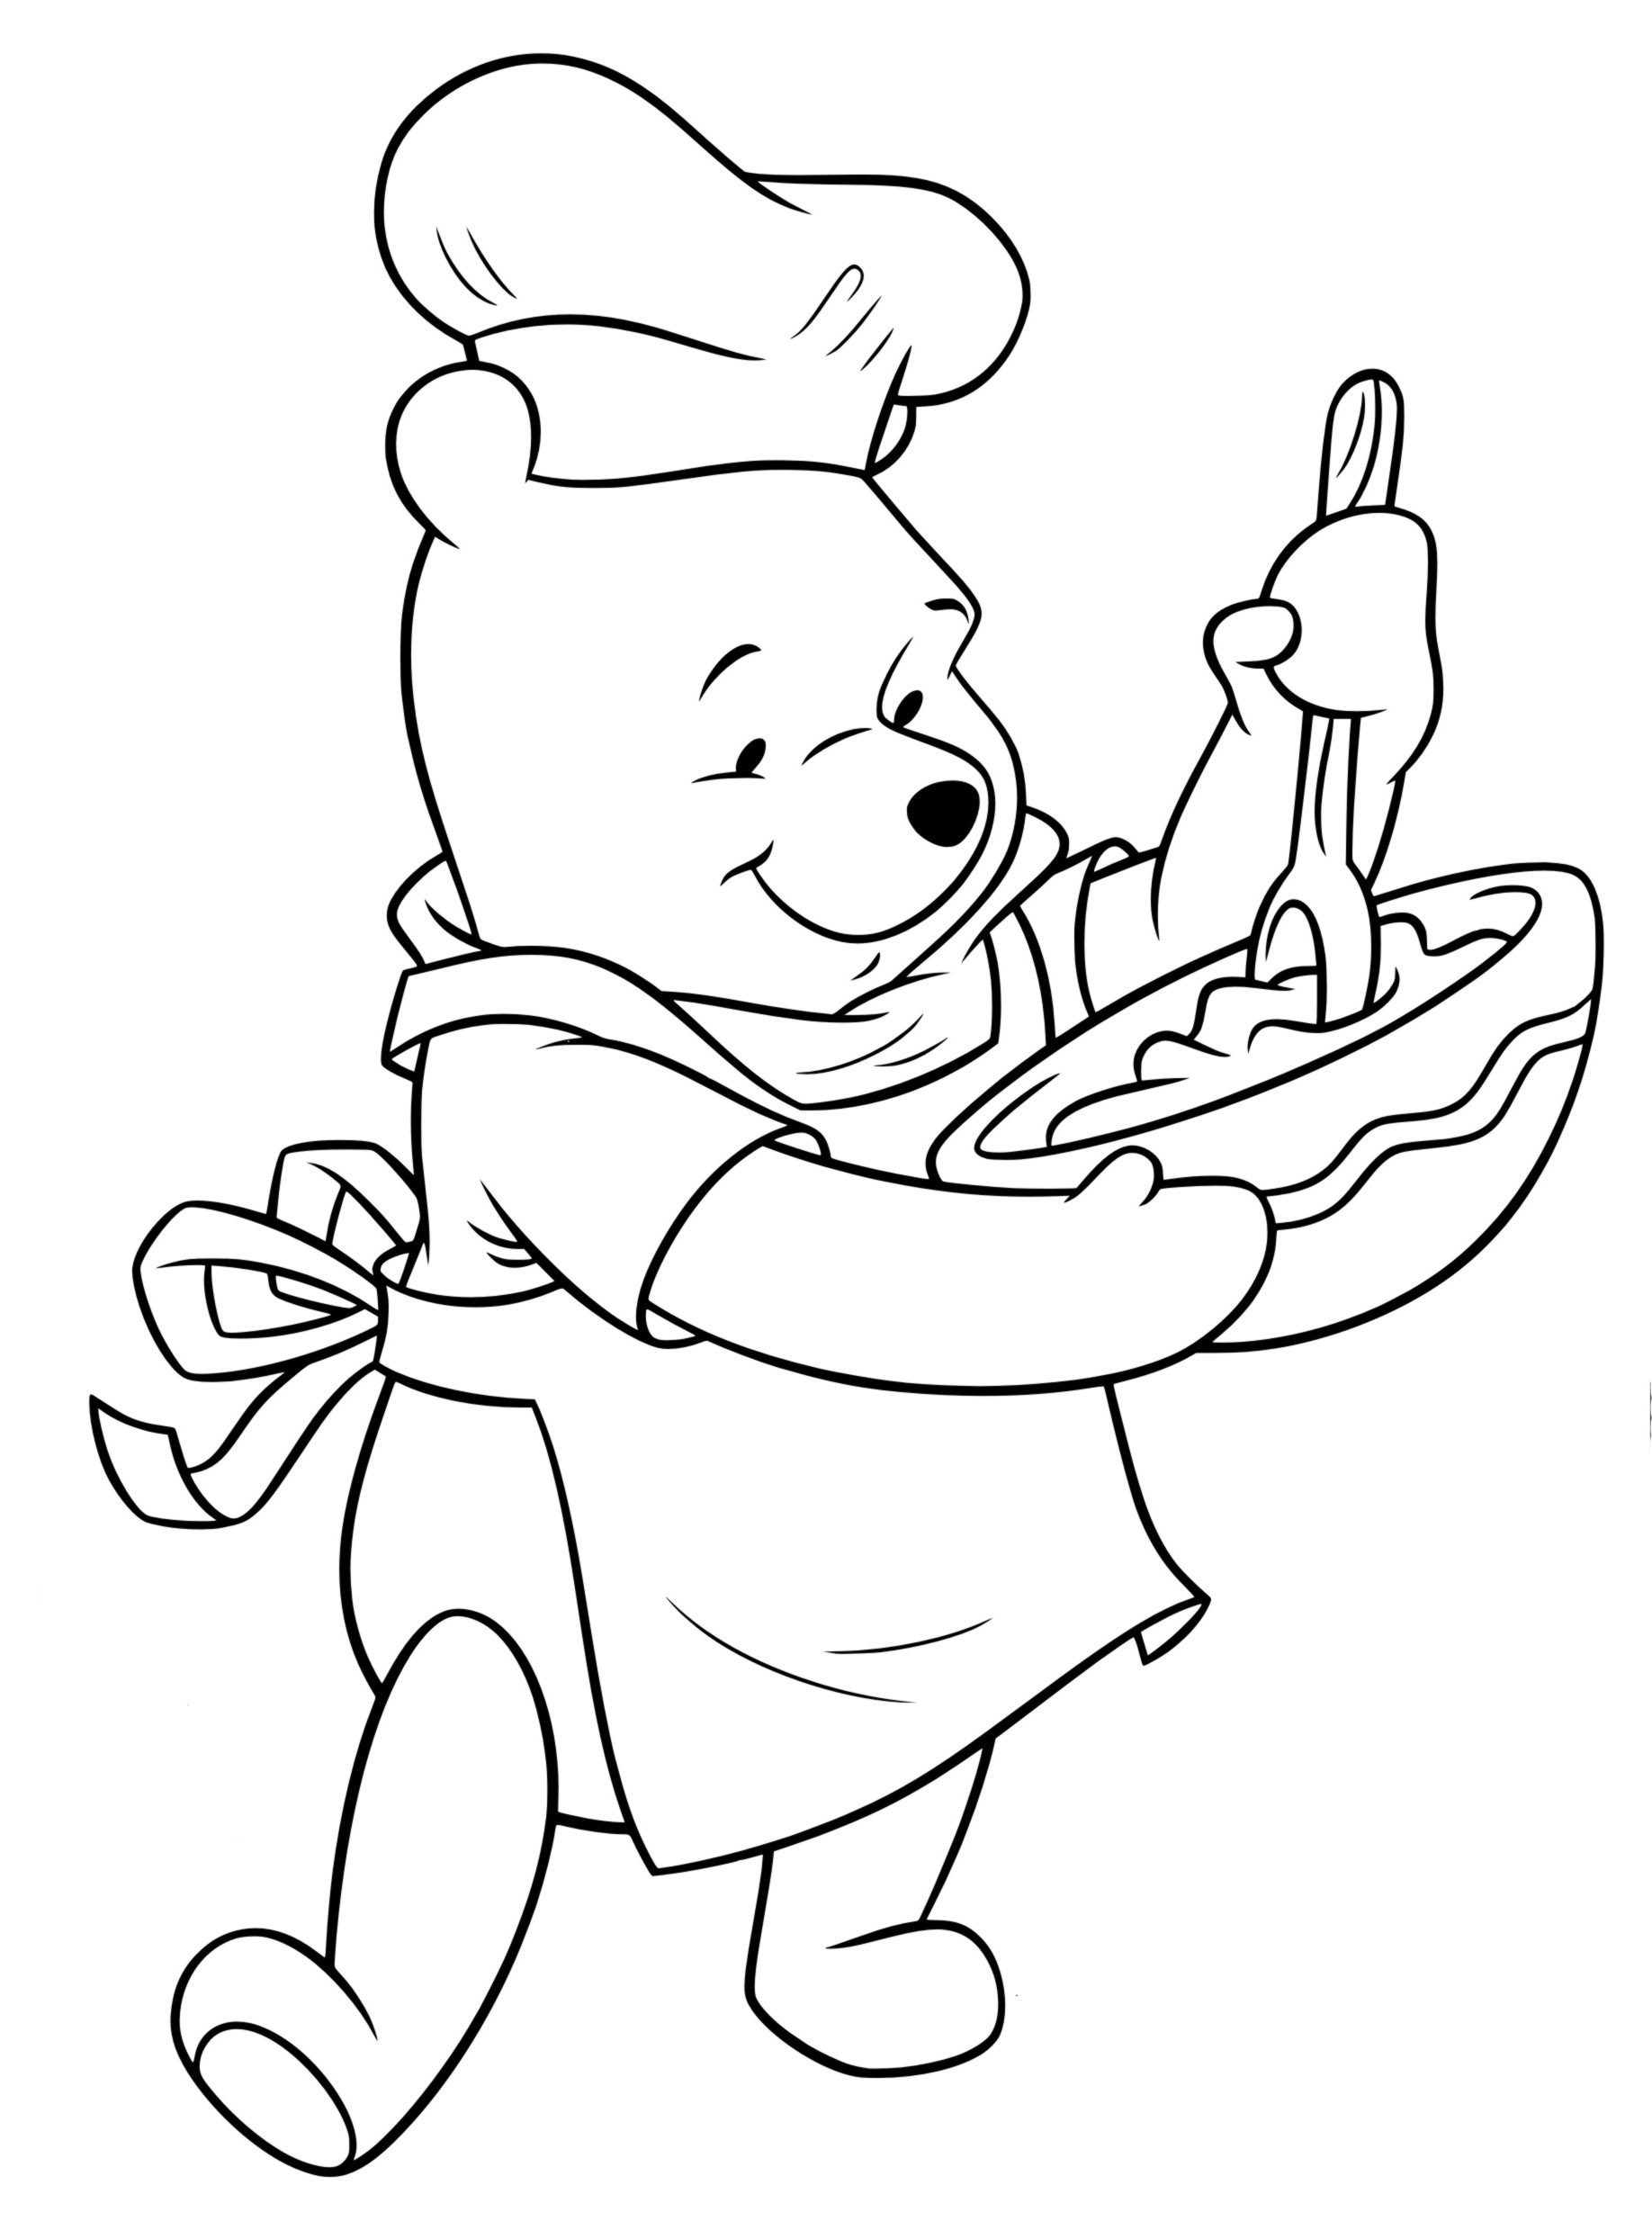 Winnie the pooh chef